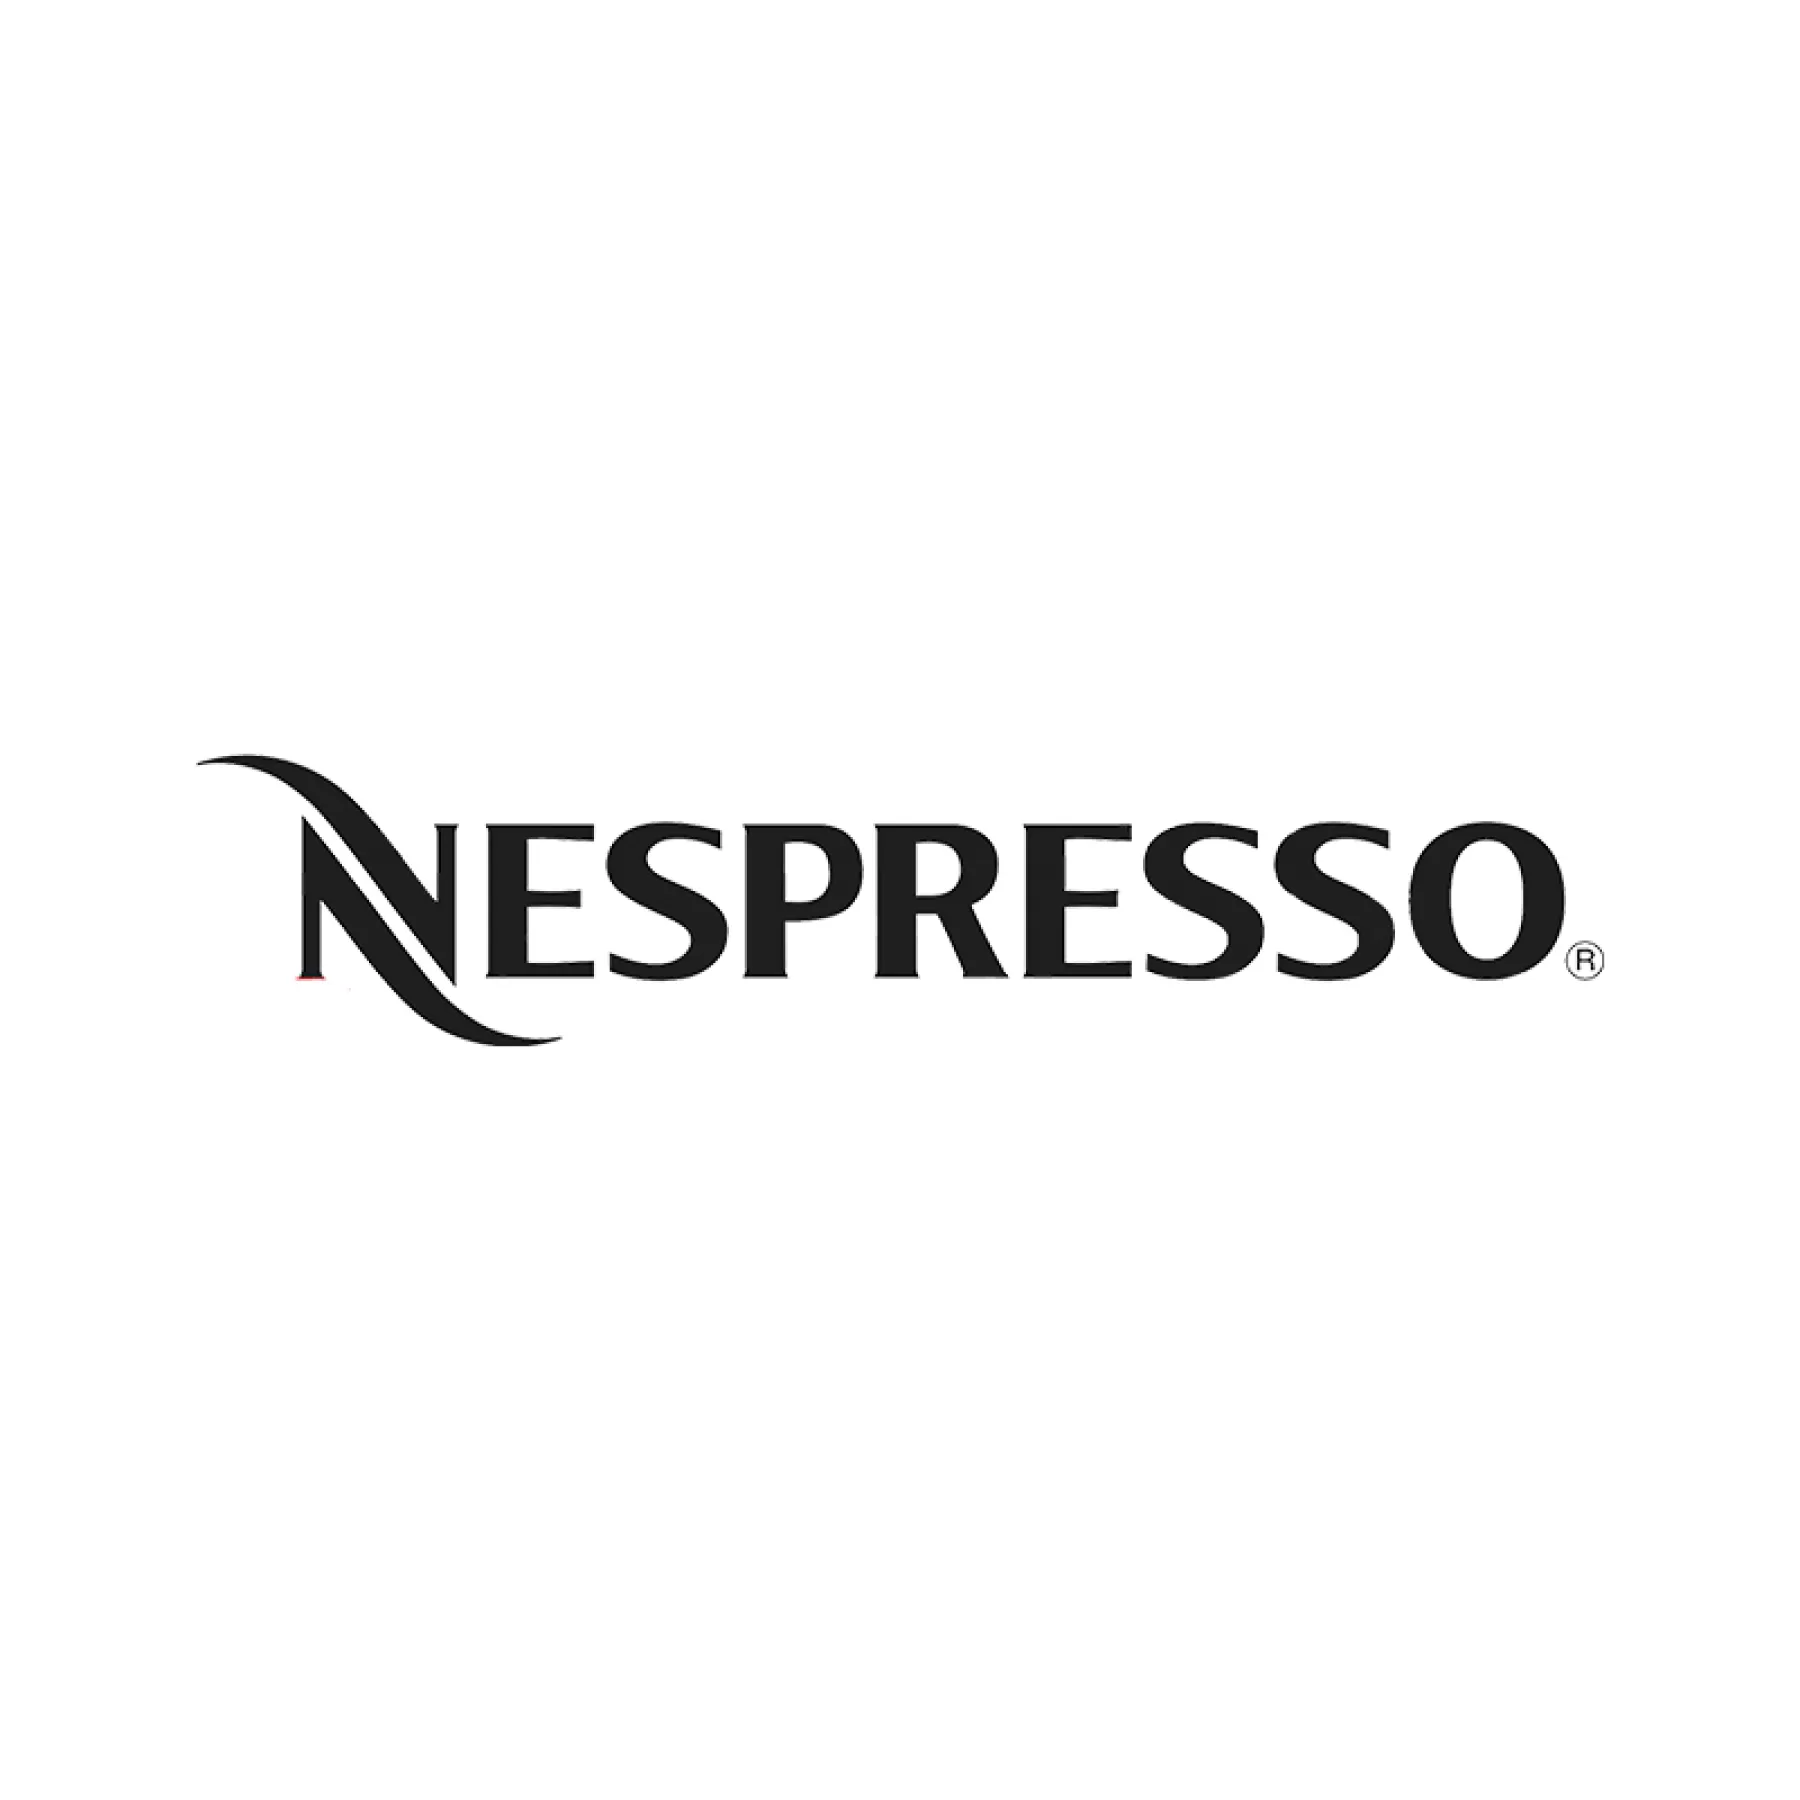 Illustration - Nespresso